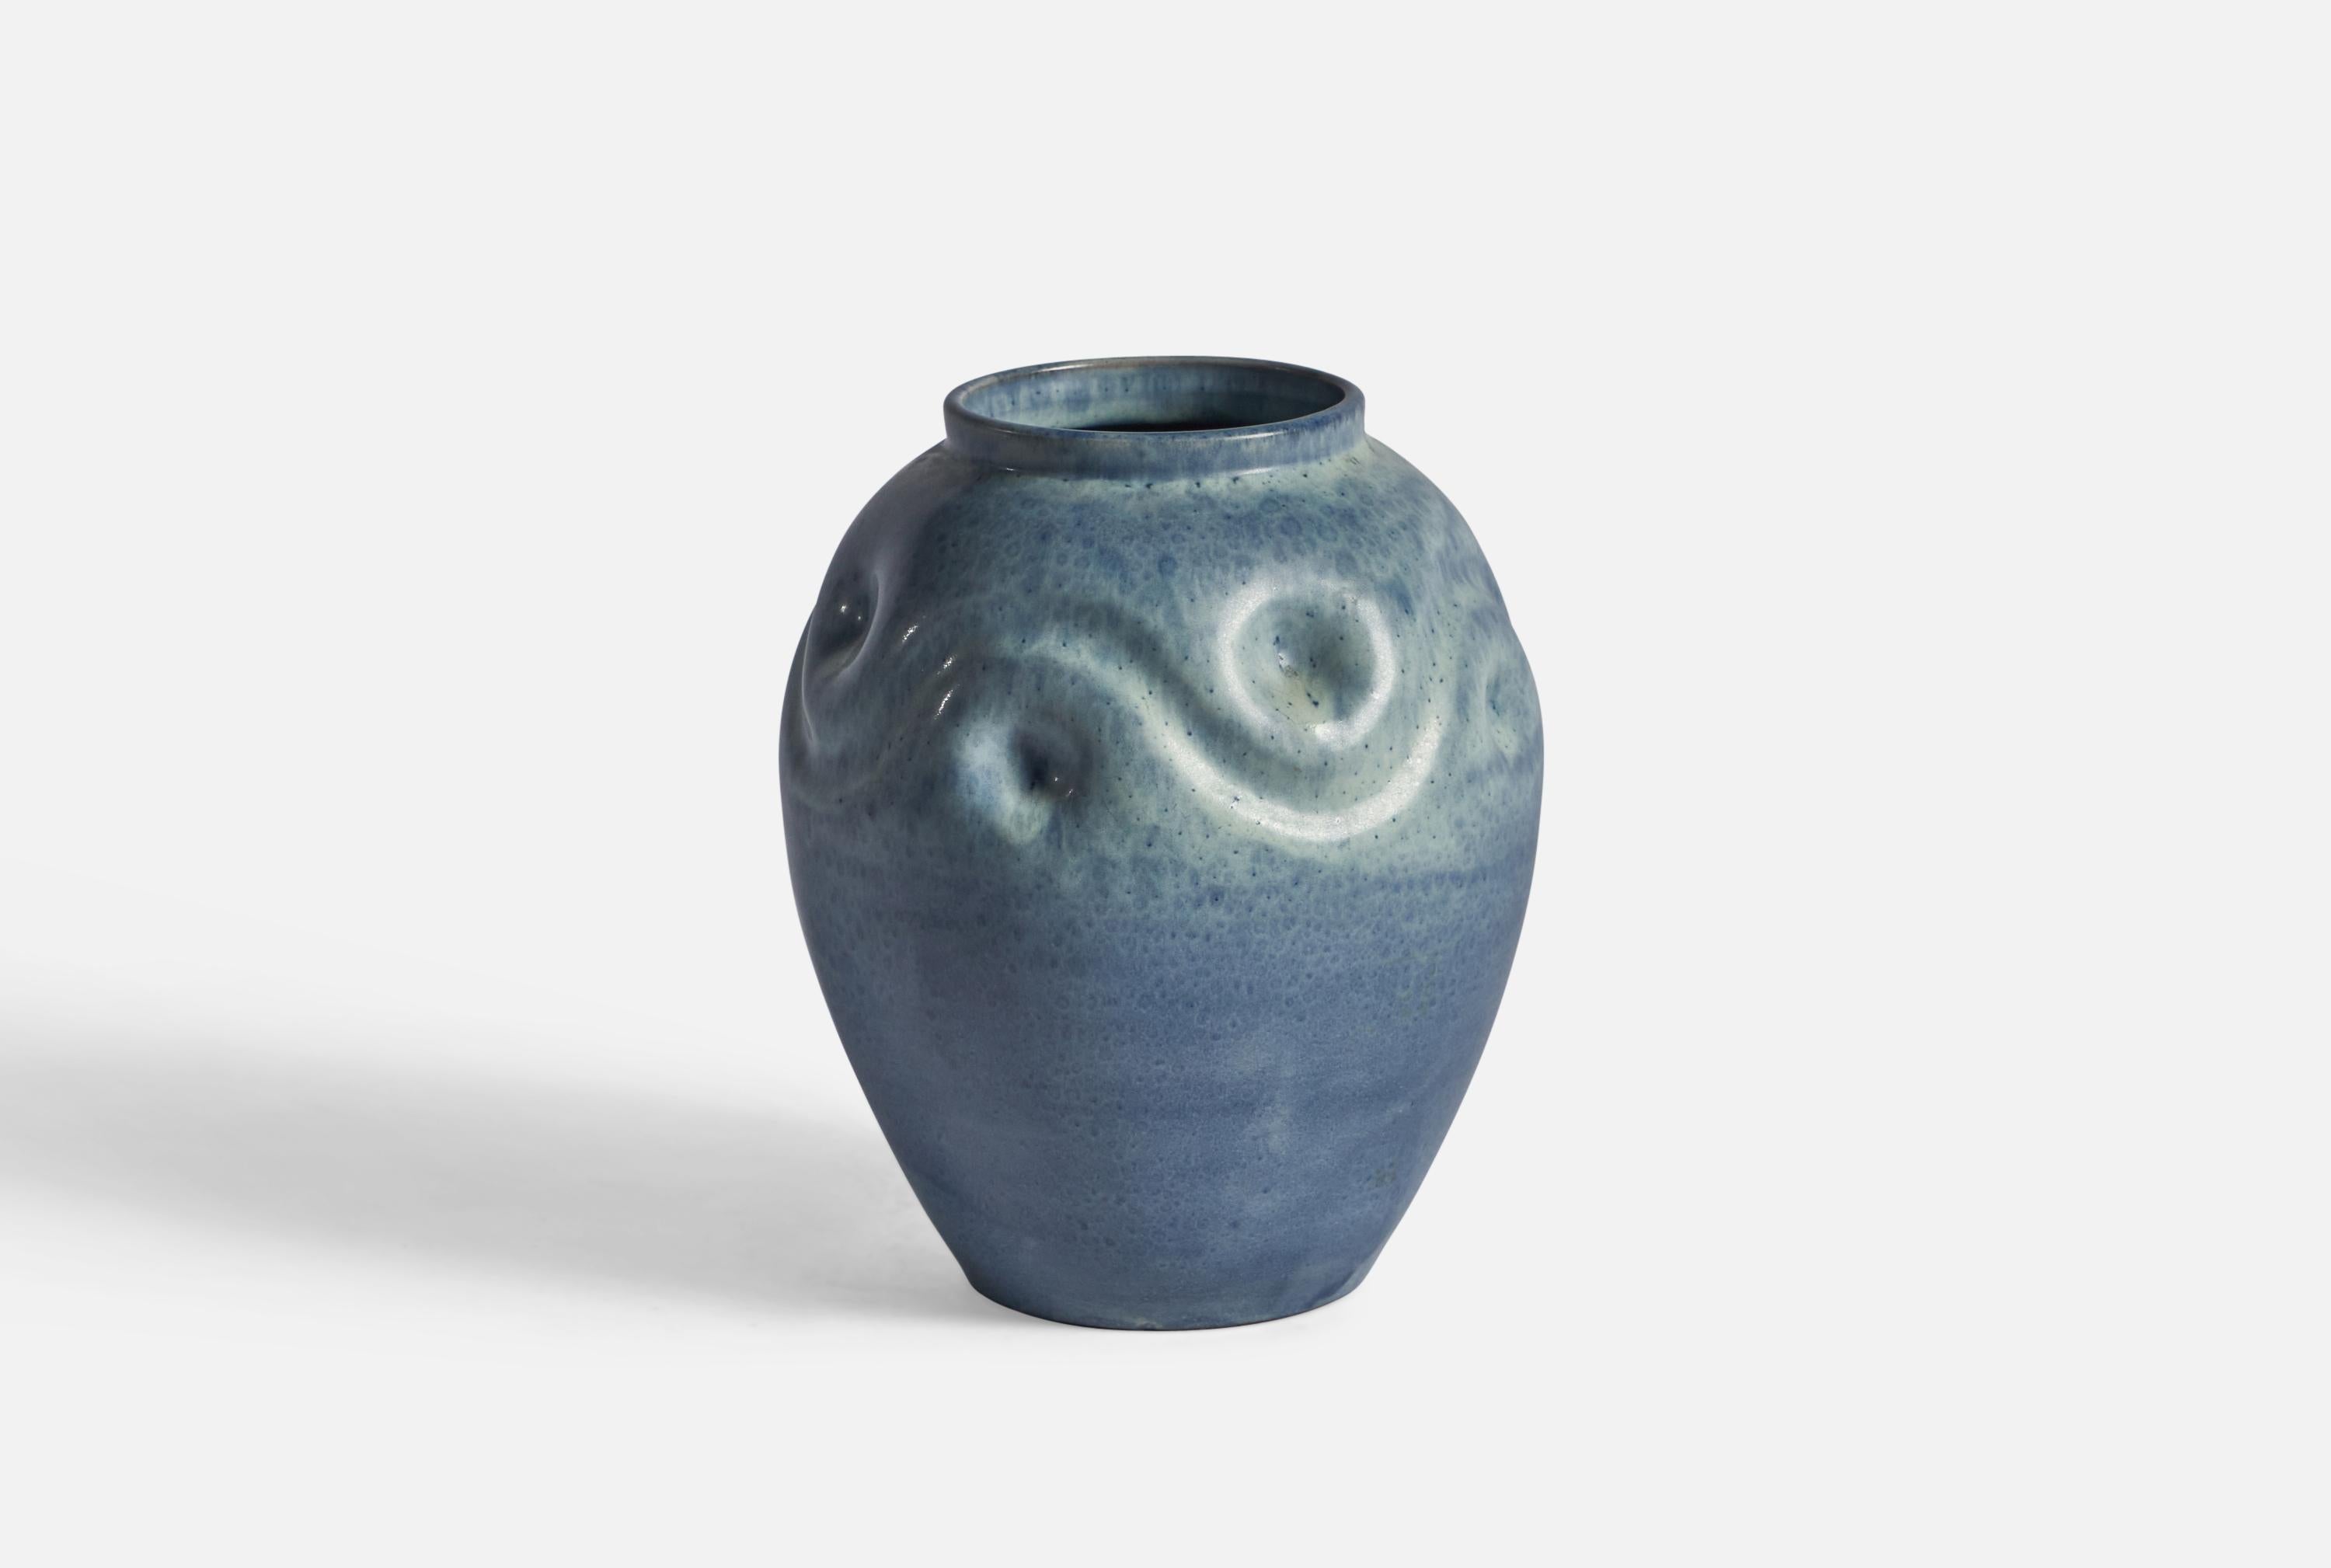 A blue-glazed earthenware vase designed and produced by Upsala Ekeby, Sweden, c. 1930s.